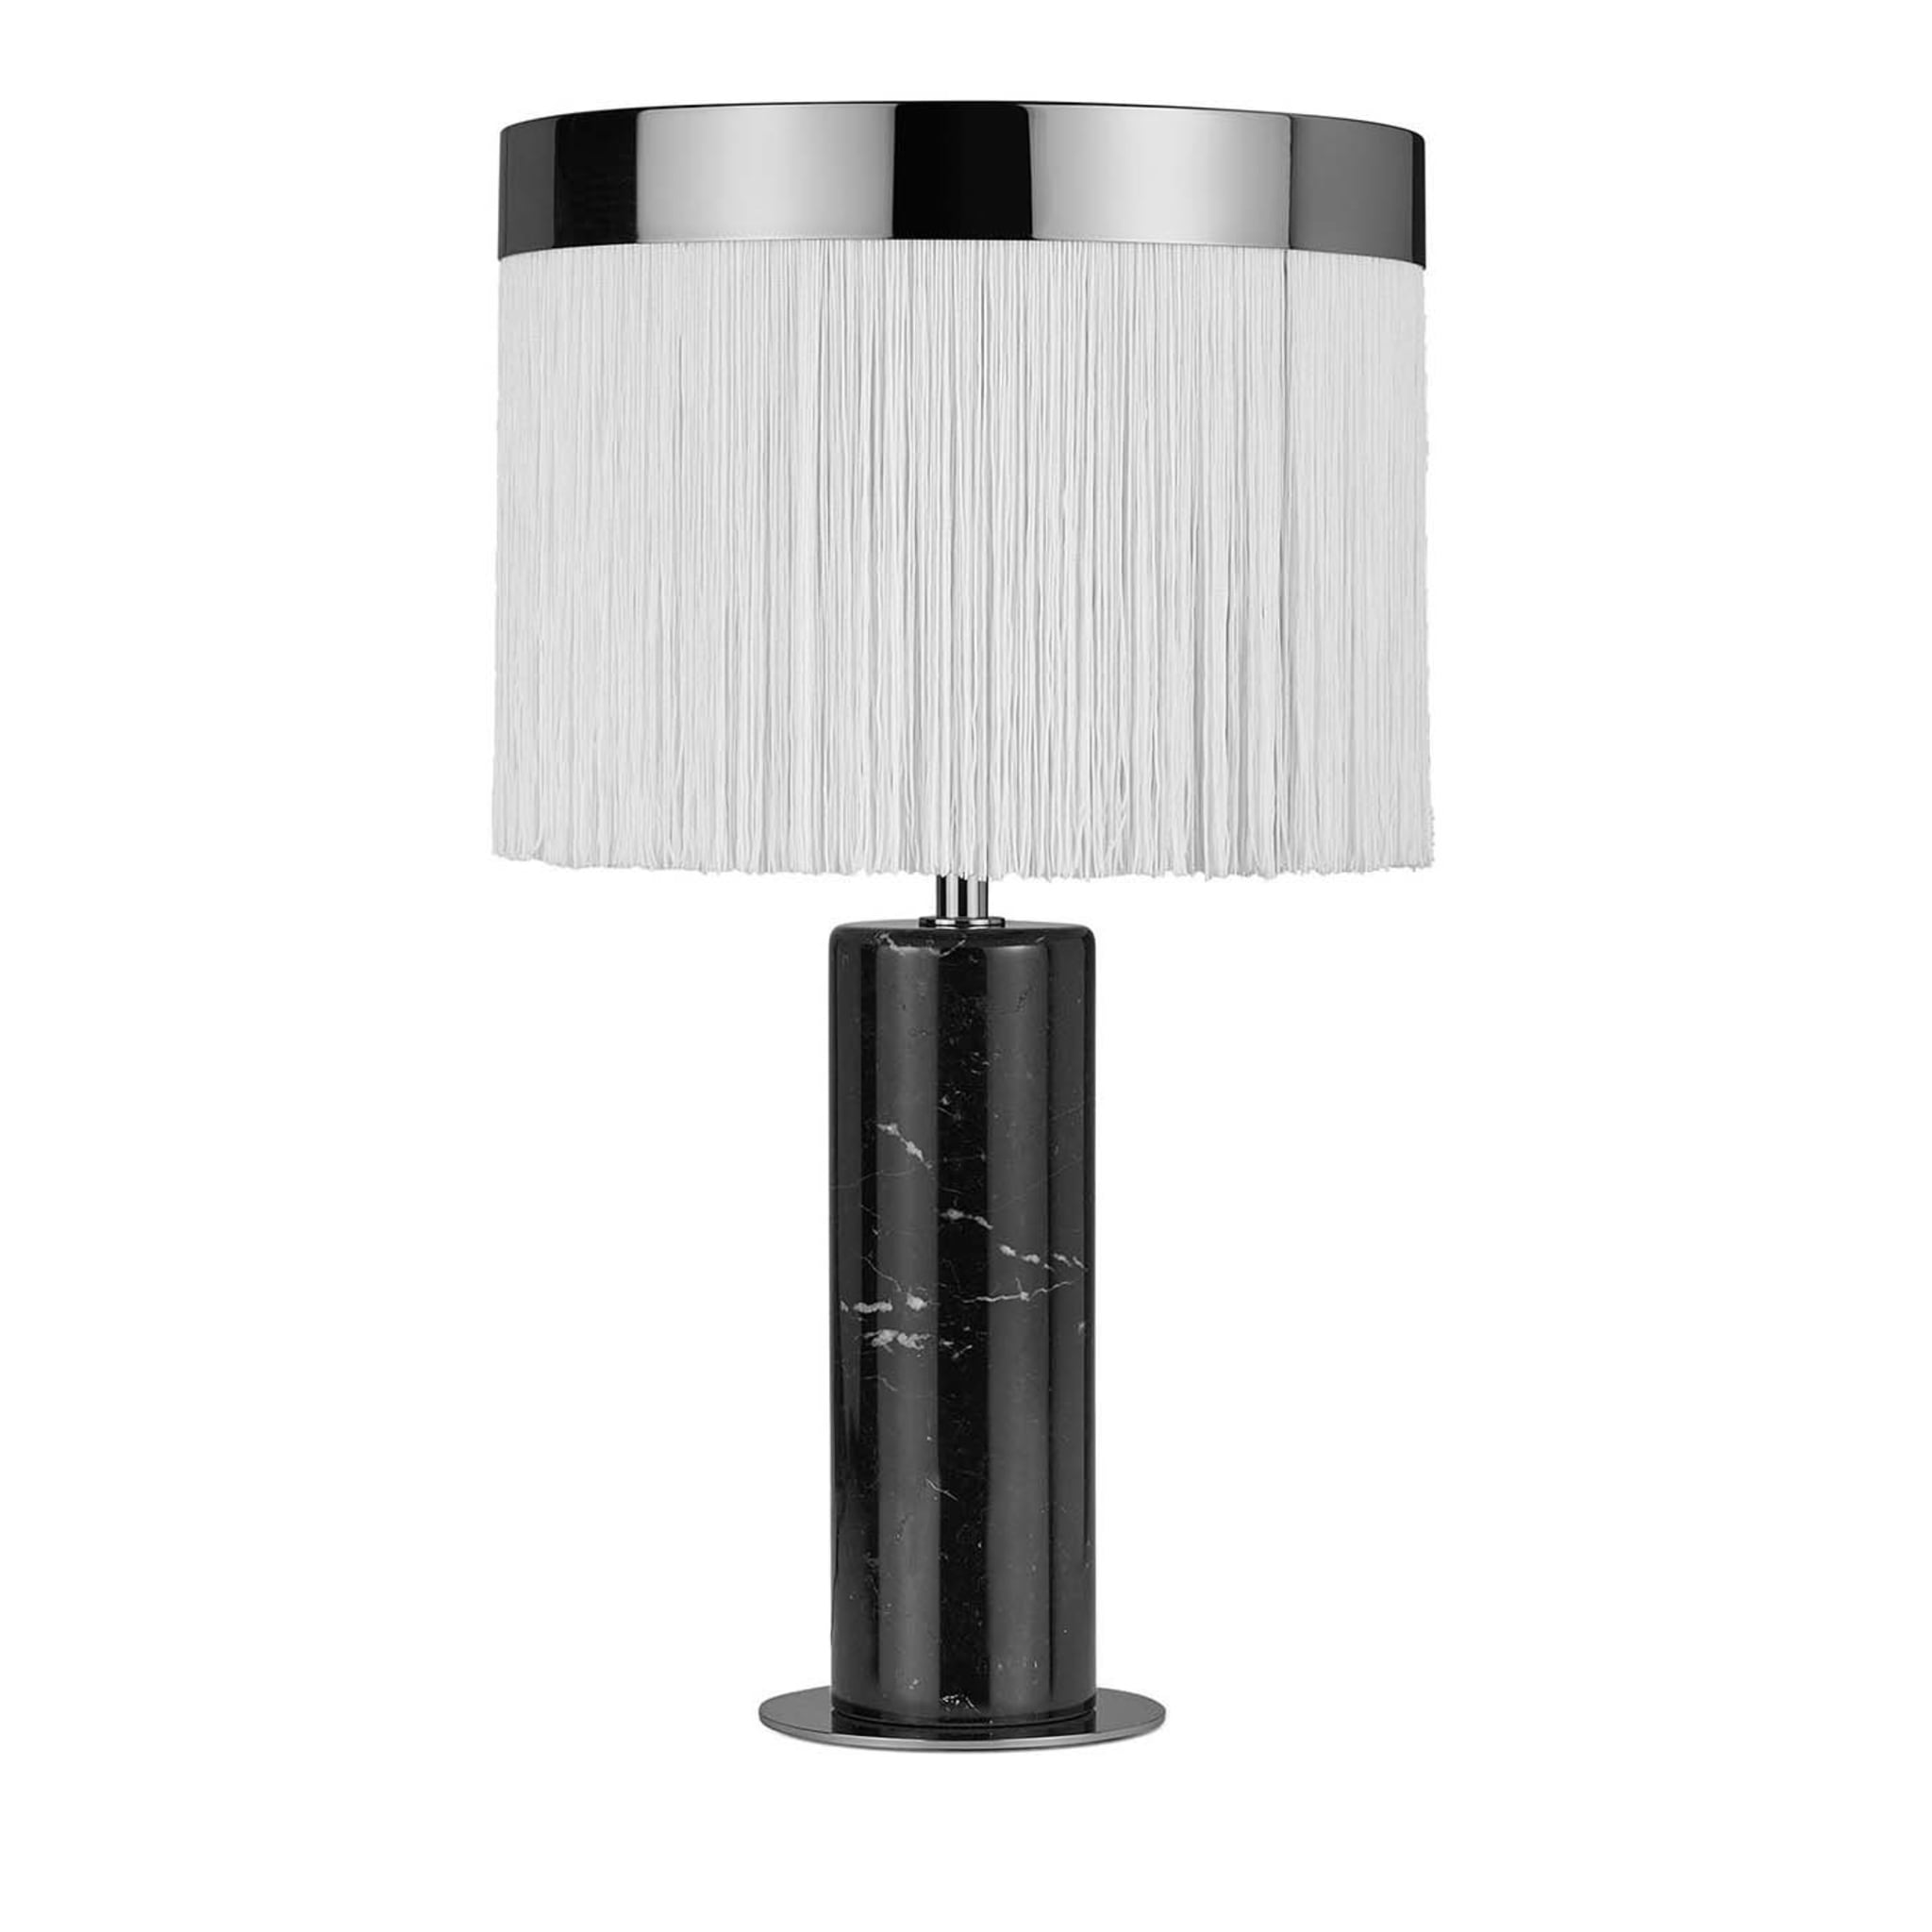 Orsola Black & White Table Lamp by Lorenza Bozzoli - Main view